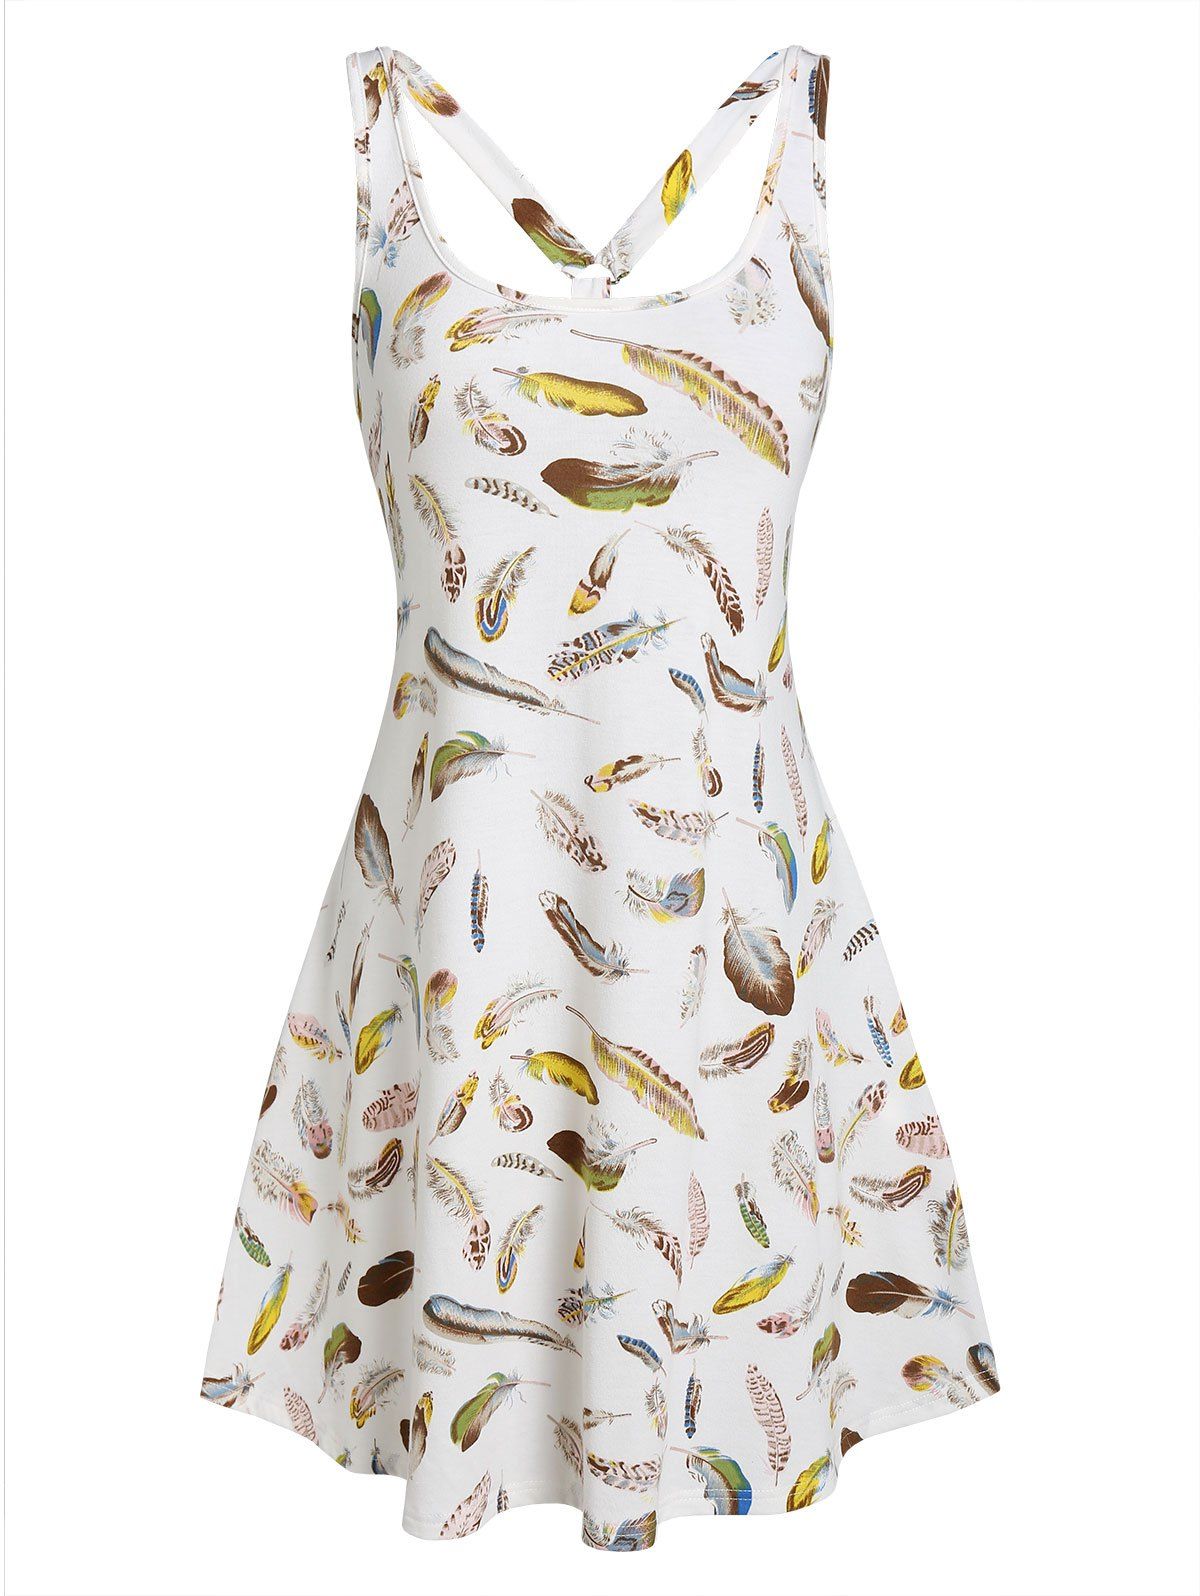 Sleeveless Feather Print Flare Dress - WHITE M